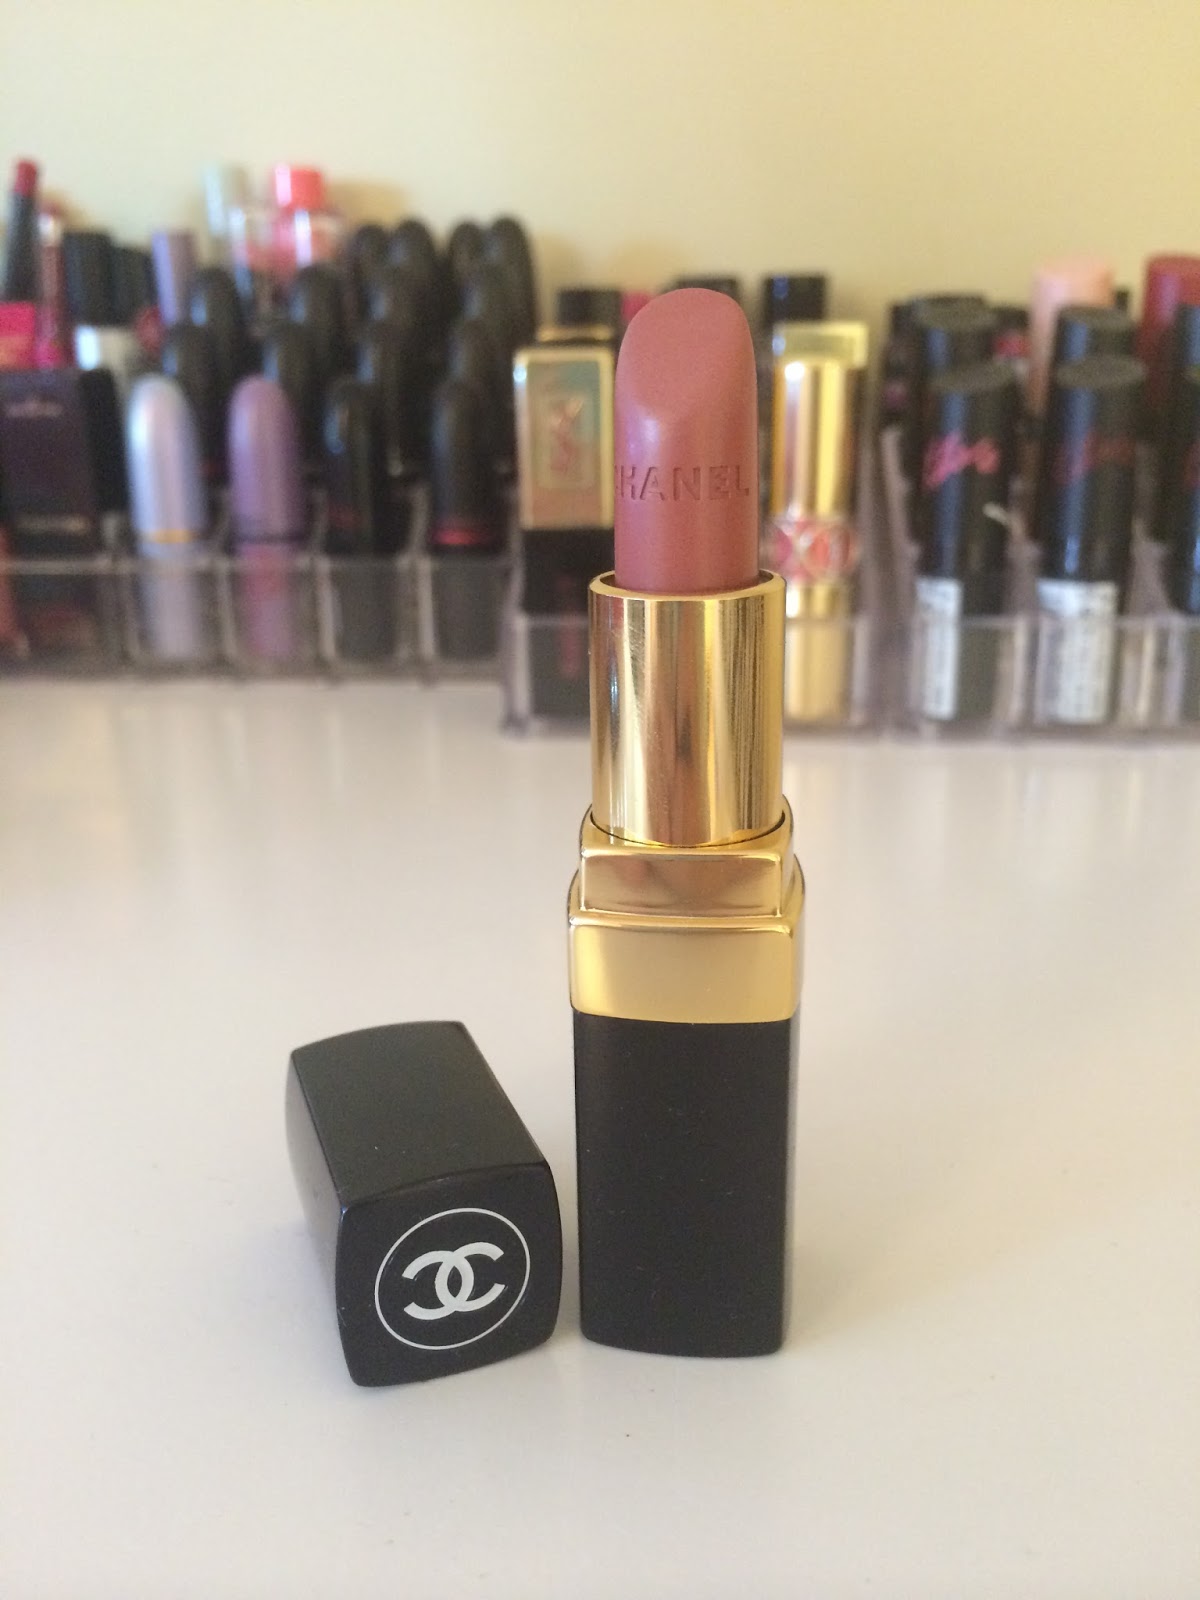 Chanel Rouge Coco Lipstick in Adrienne/Best Chanel Lipstick #shorts 